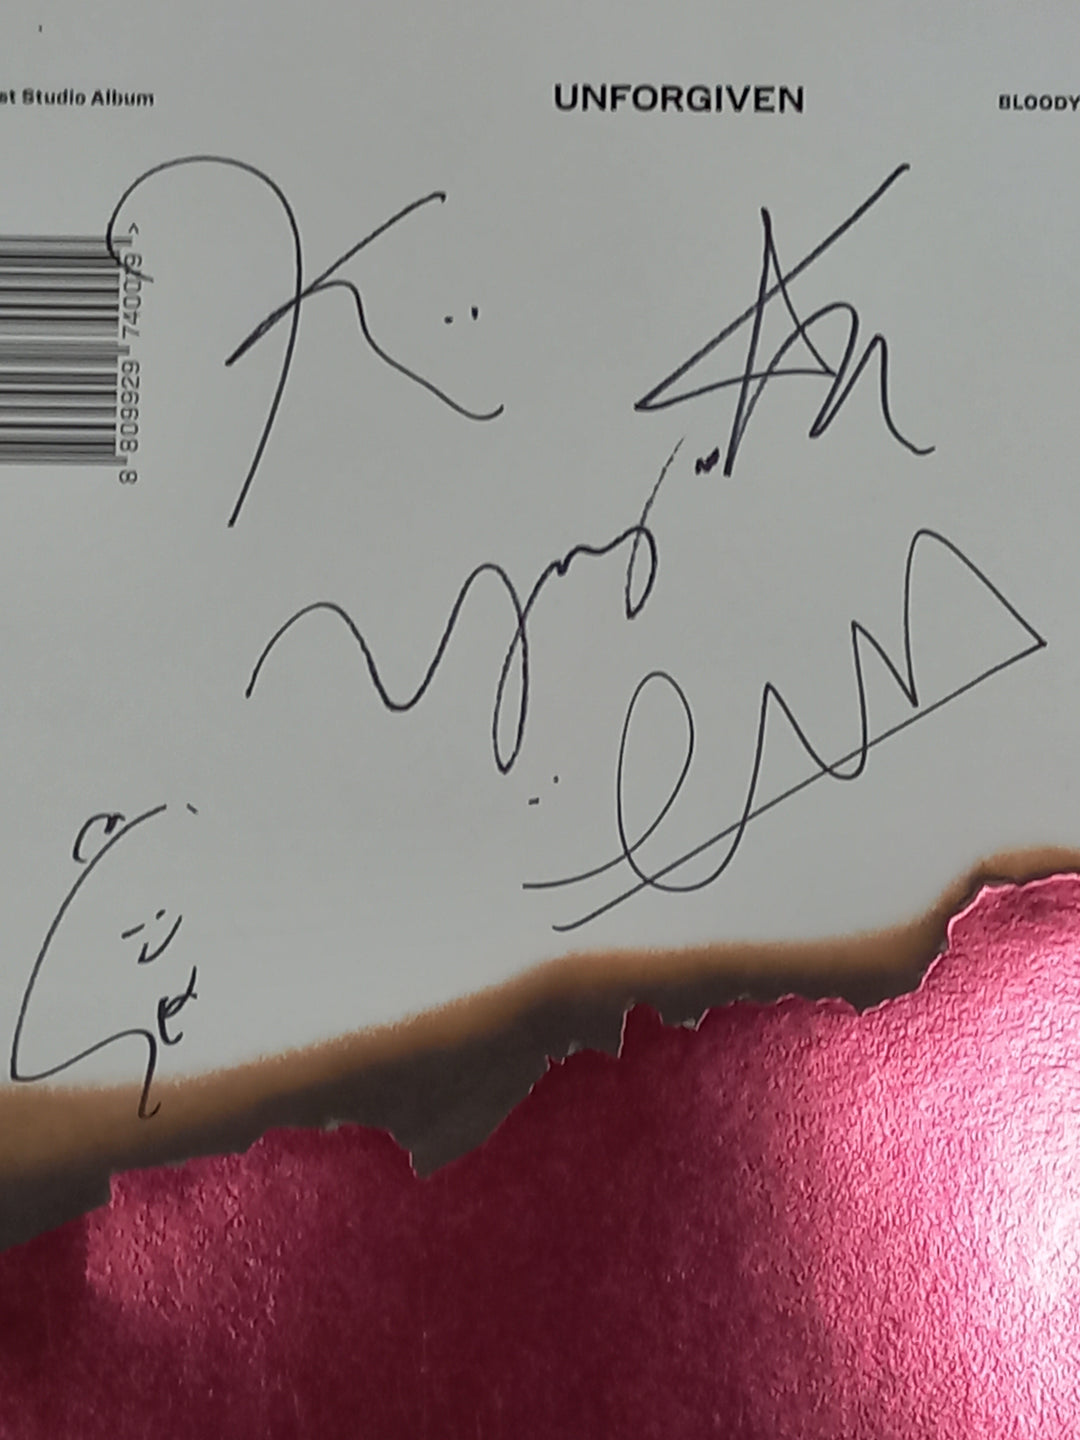 IVE, LE SSERAFIM - Hand Autographed(Signed) Promo Album [24.3.22]